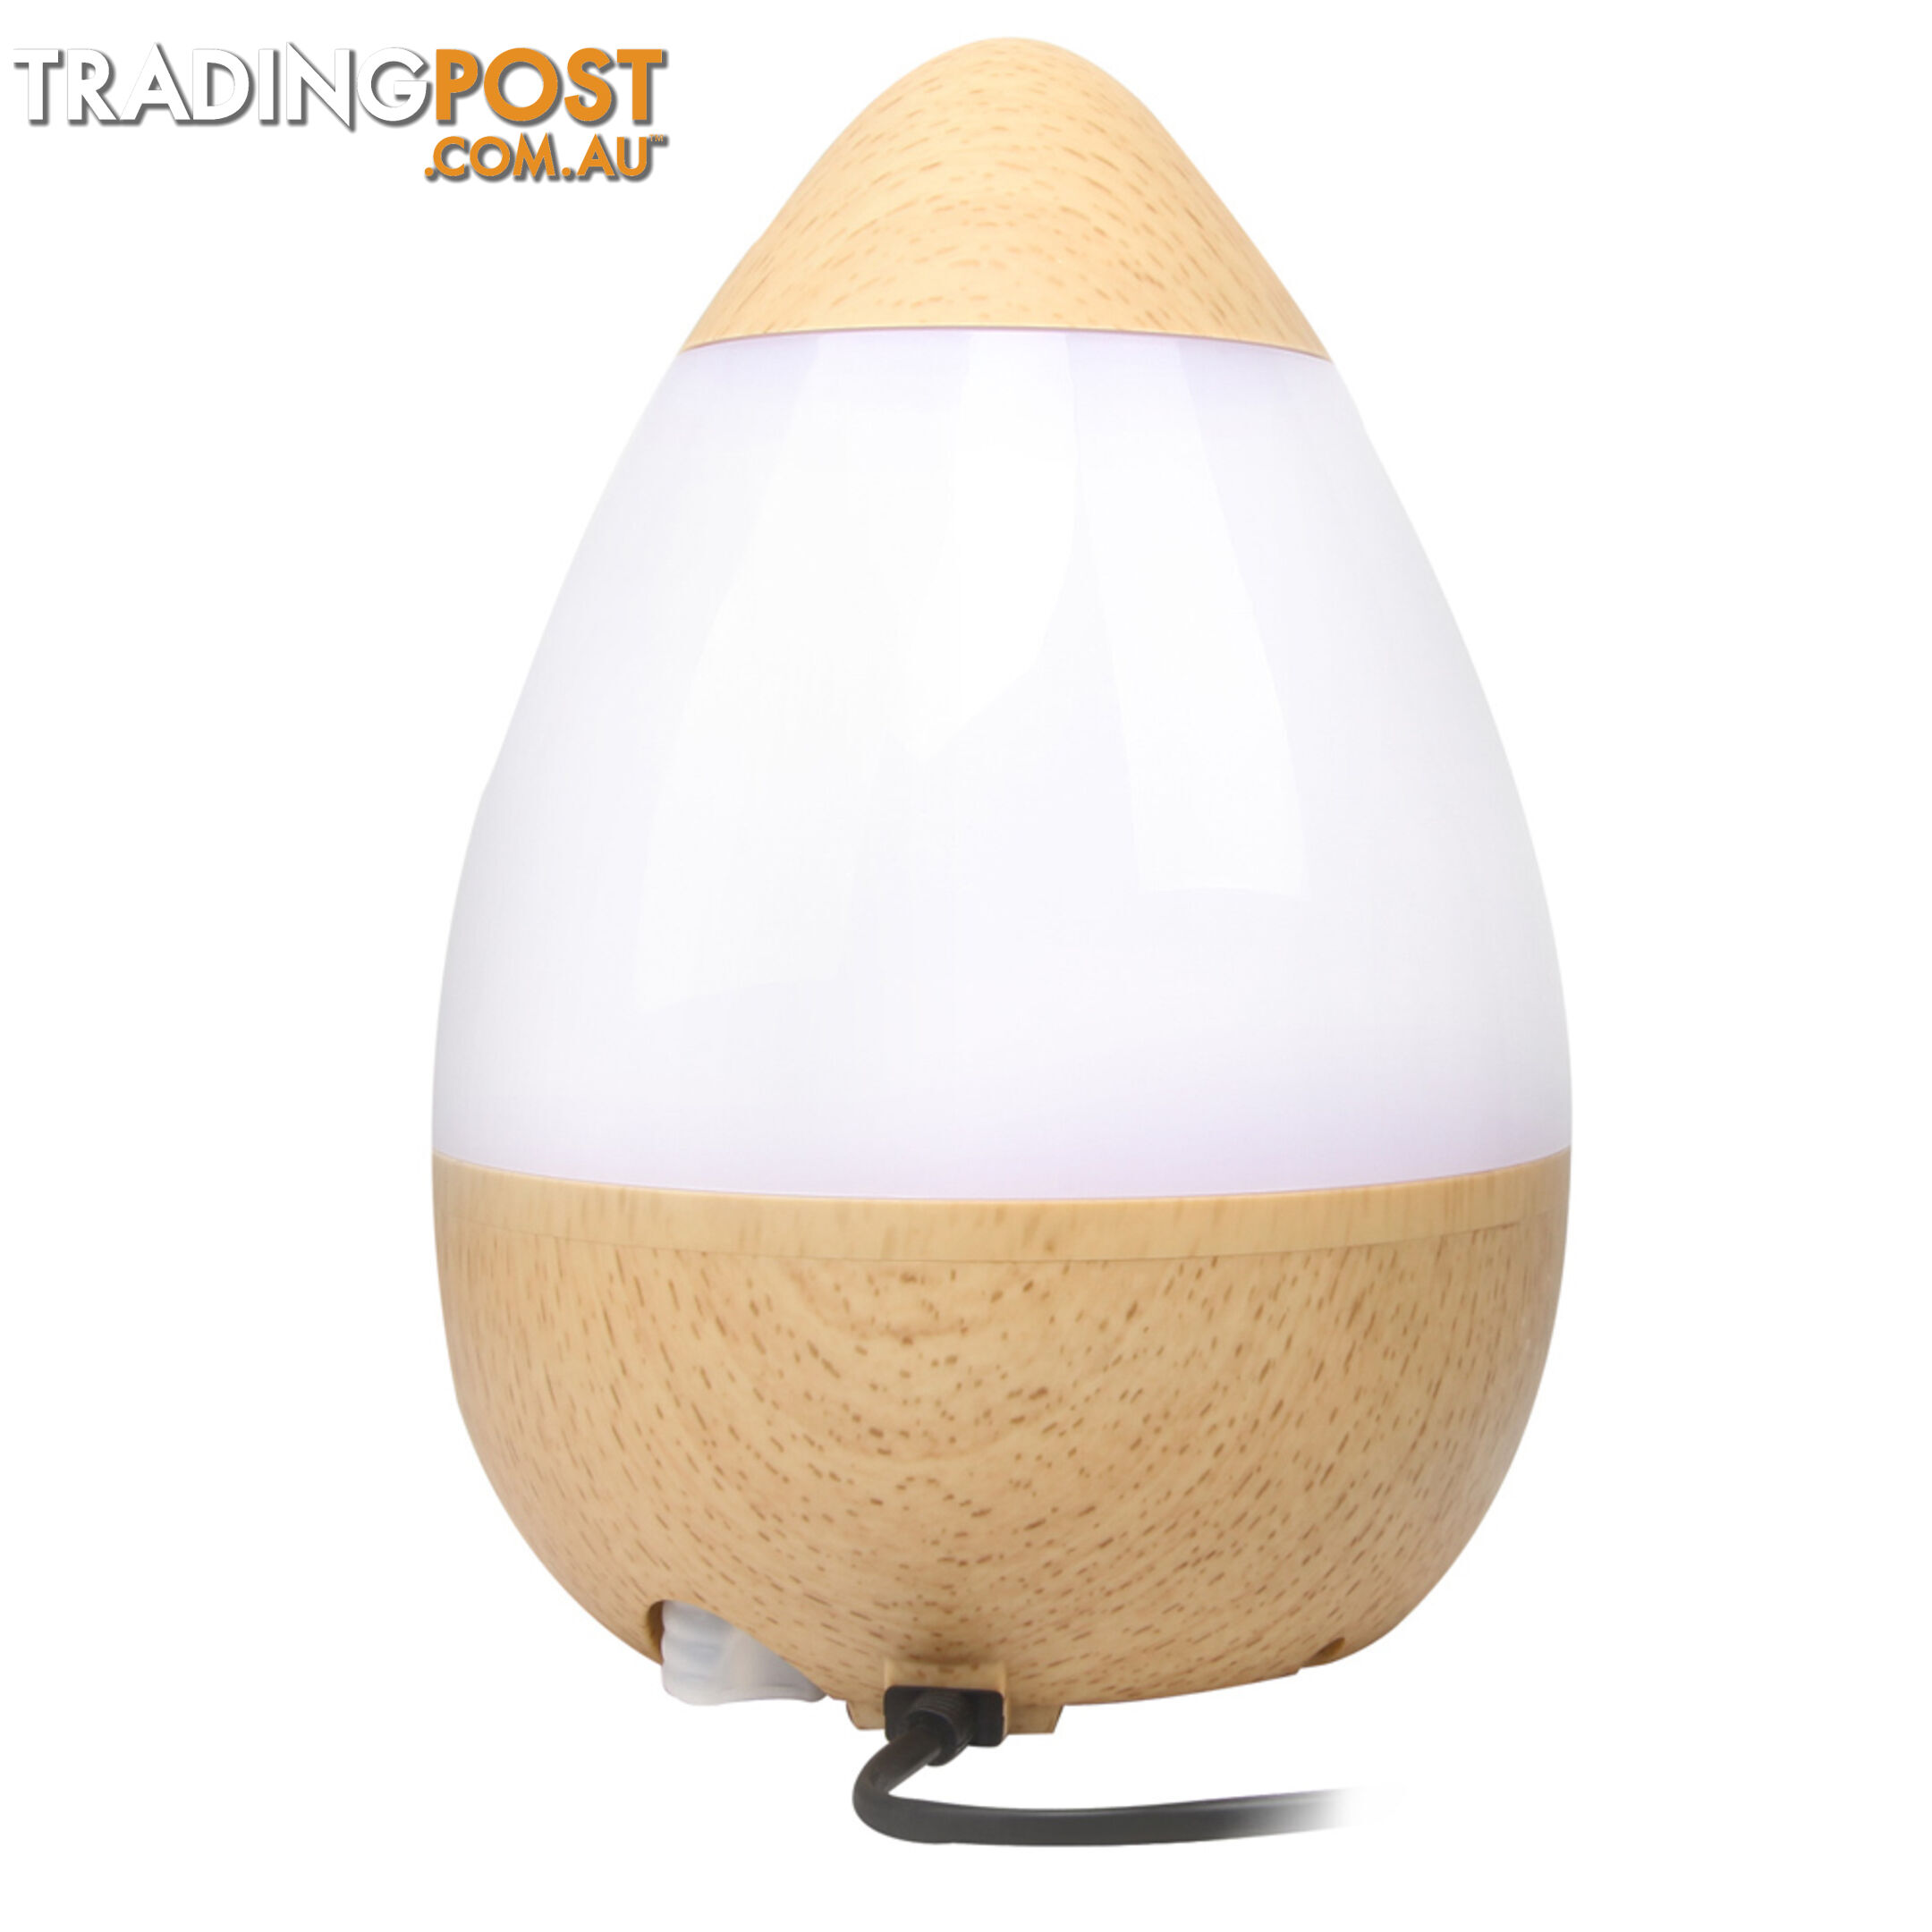 Ultrasonic Cool Mist Air Humidifier 2.3L Natural Wood